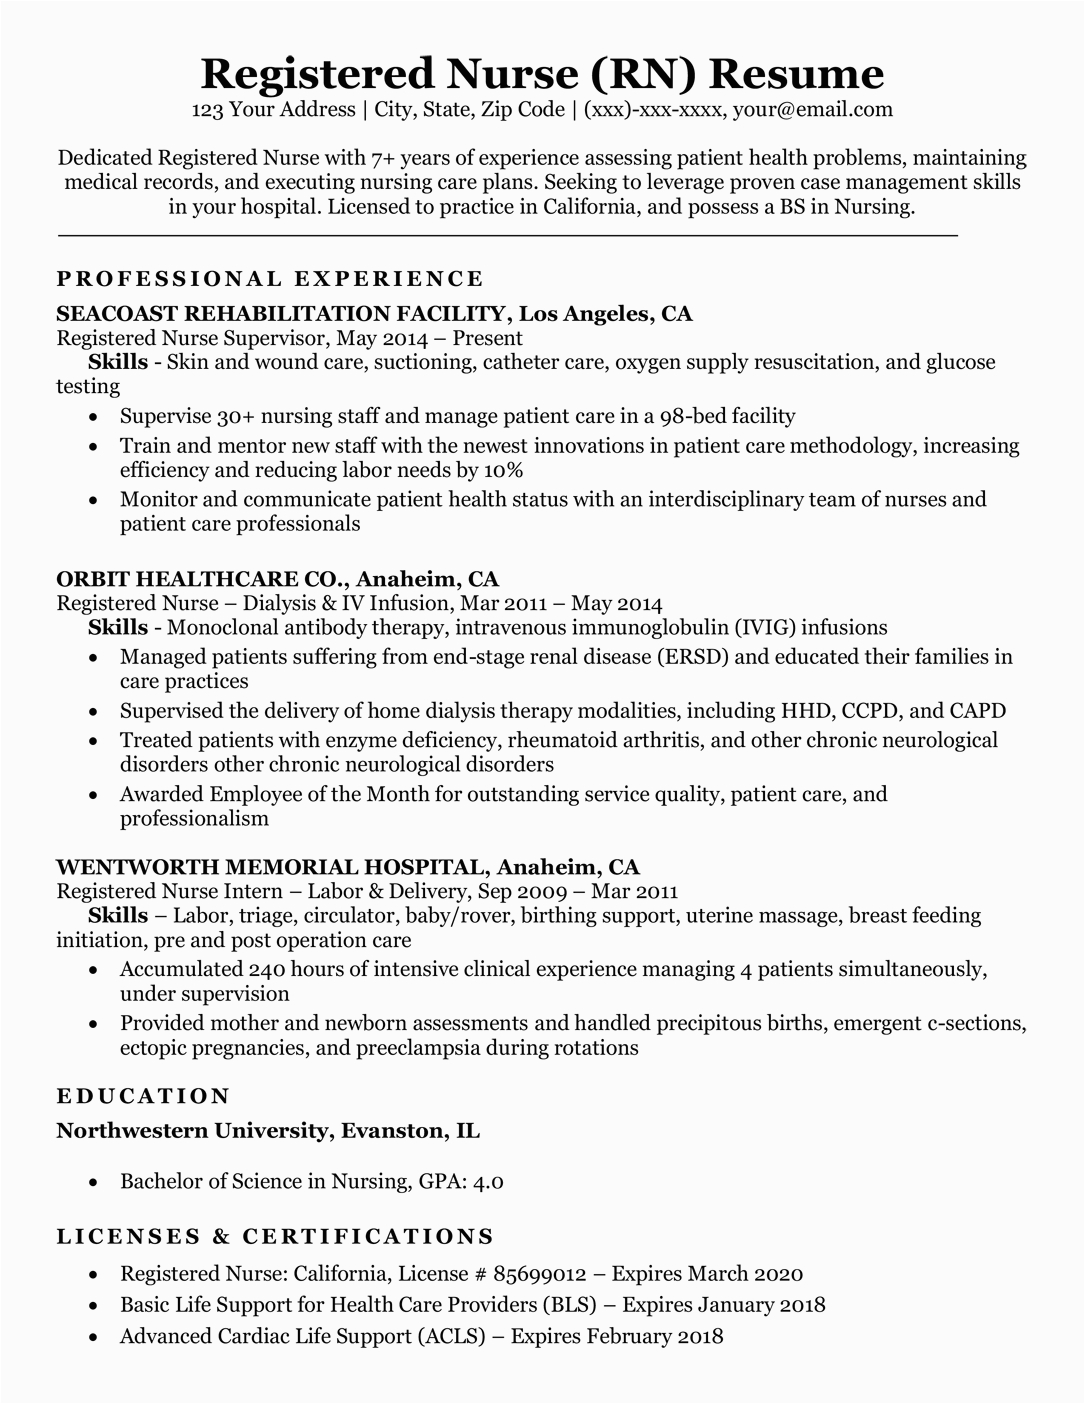 Sample Resume Of An or Nurse Registered Nurse Rn Resume Sample & Tips